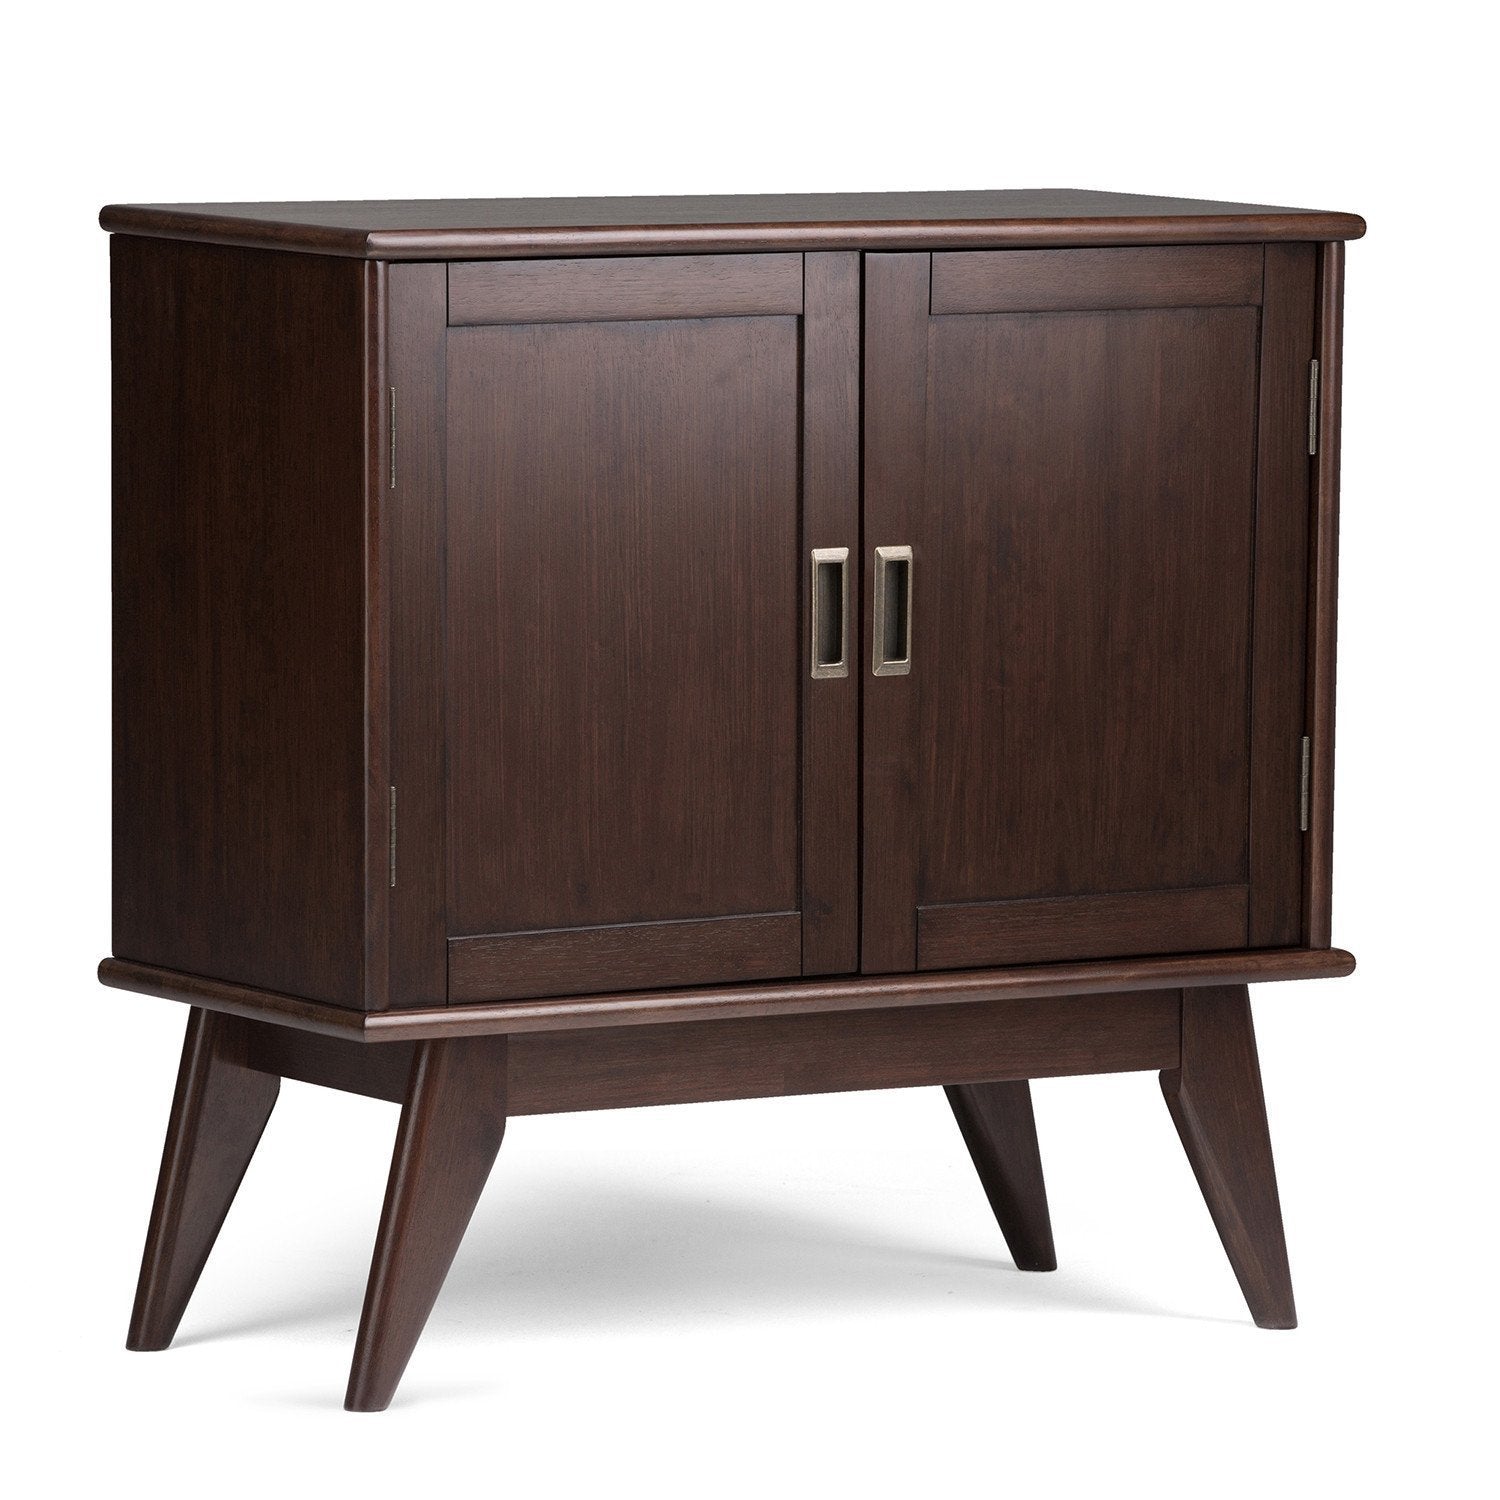 Medium Auburn Brown | Draper Mid Century 32 x 14 x 42 inch Low Storage Cabinet